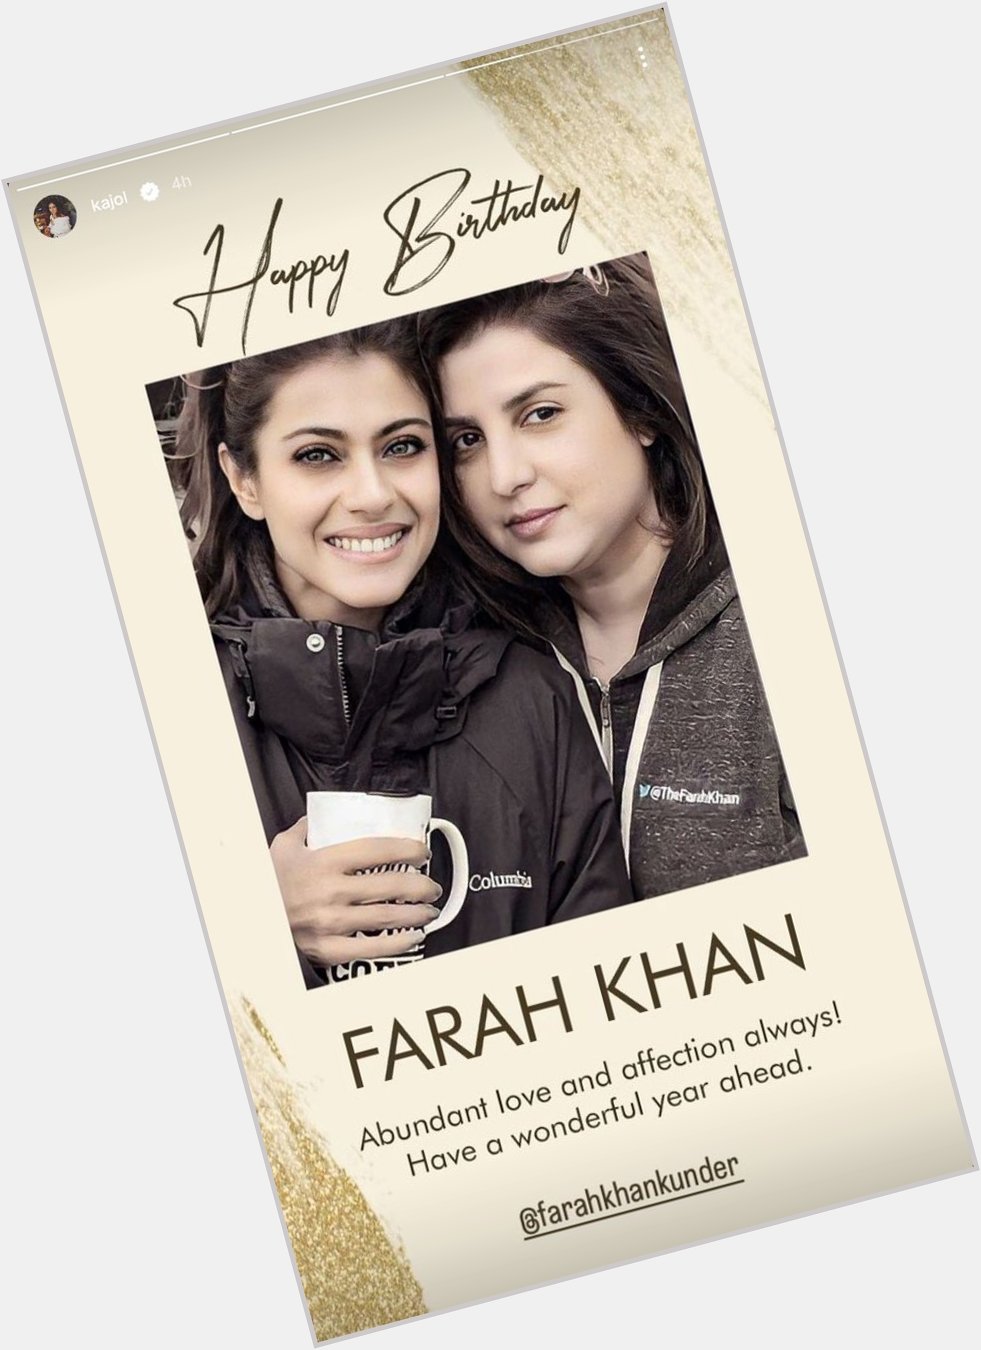 Kajol wishing Farah Khan a happy birthday   Happy birthday   